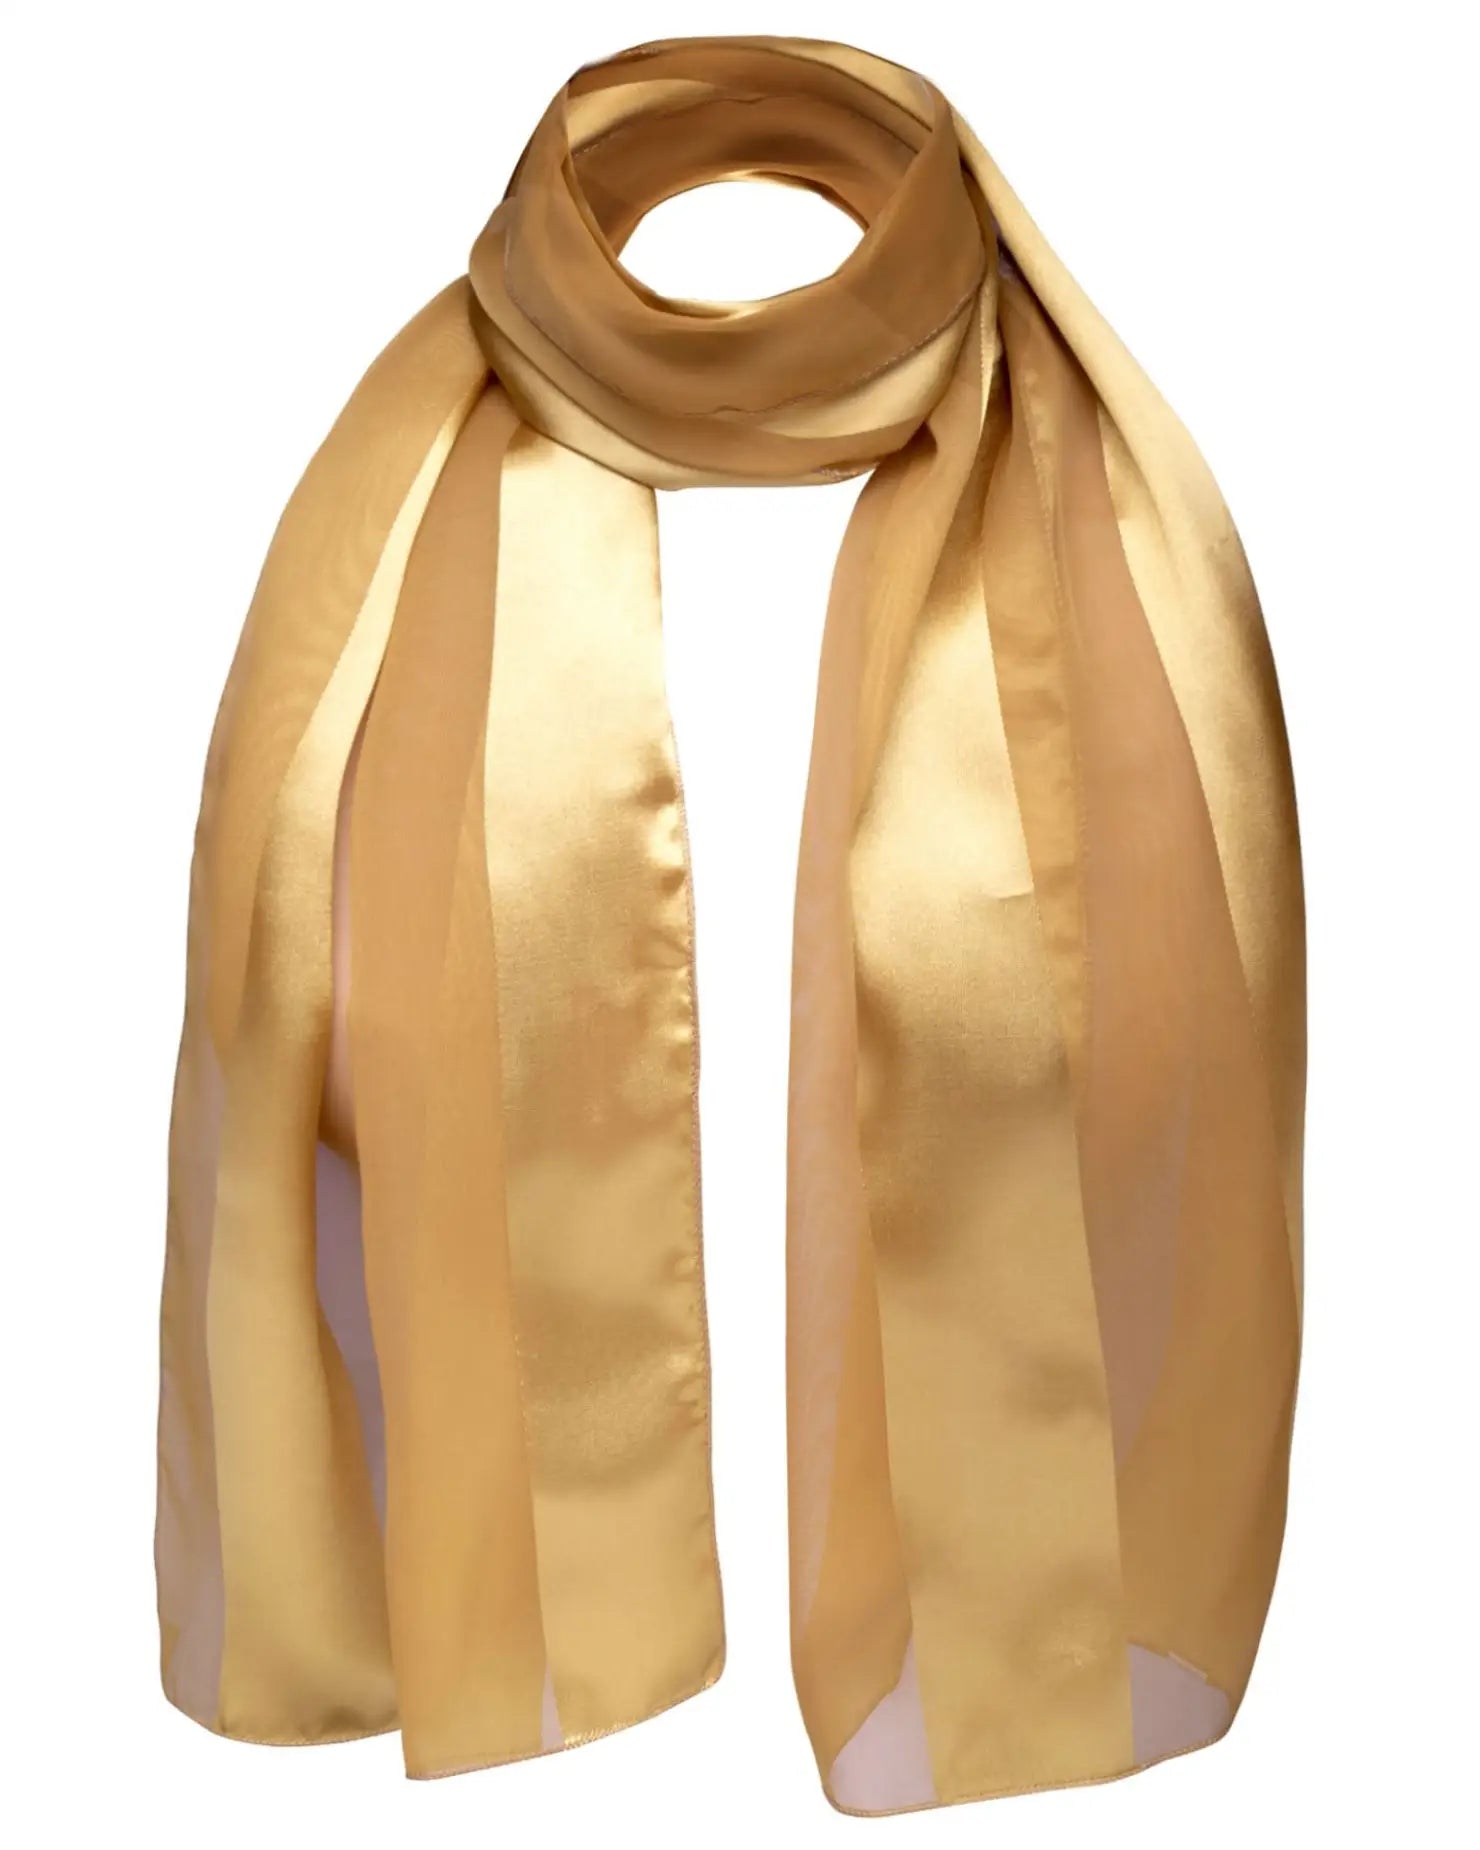 Gold satin stripe scarf on white background - Solid Shimmering Satin Stripe Scarf.